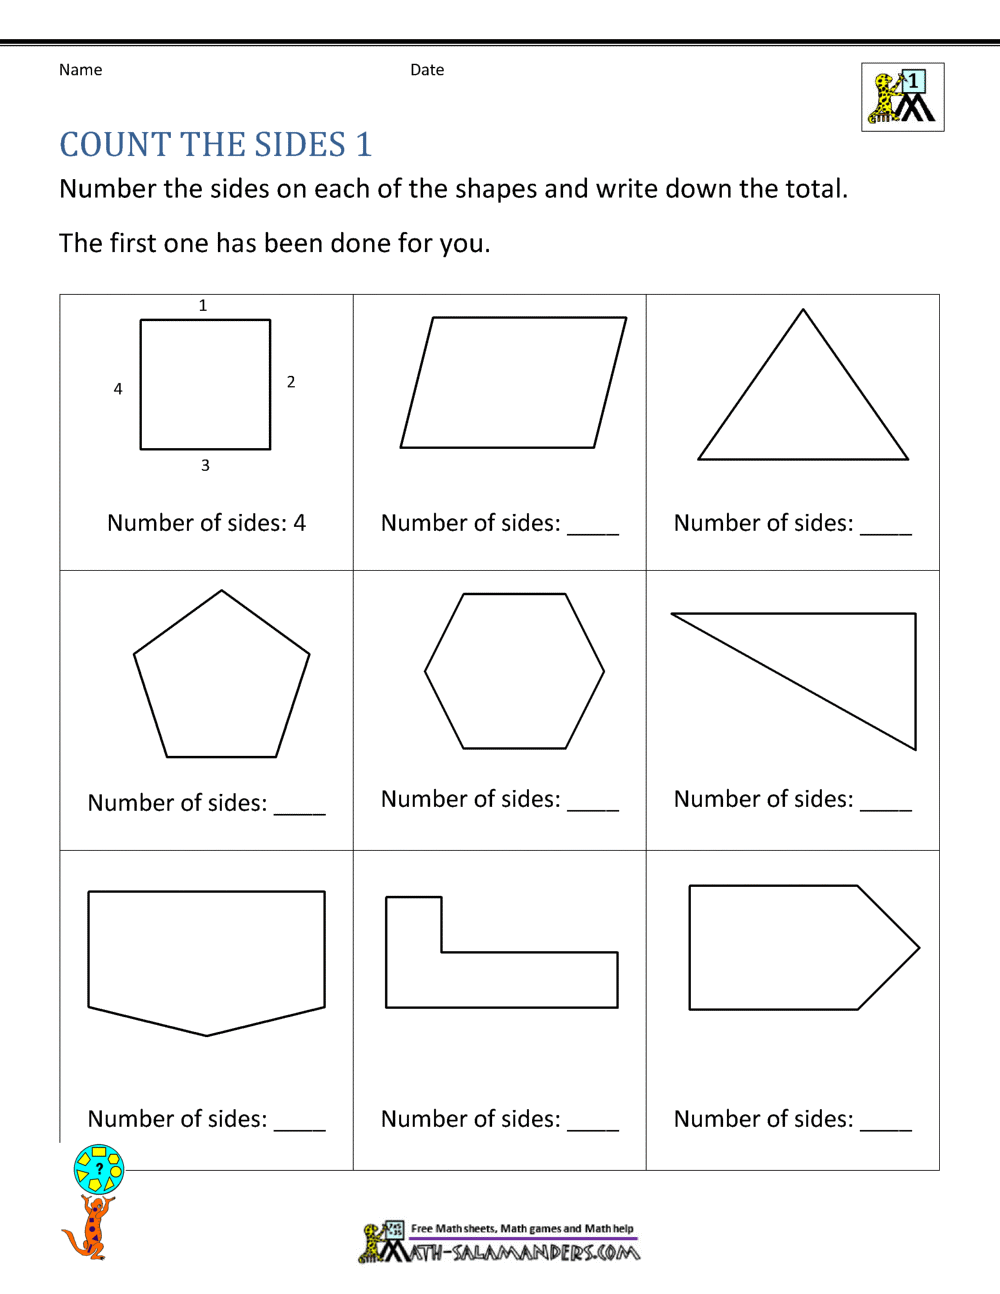 Free Online Geometry Homework Help